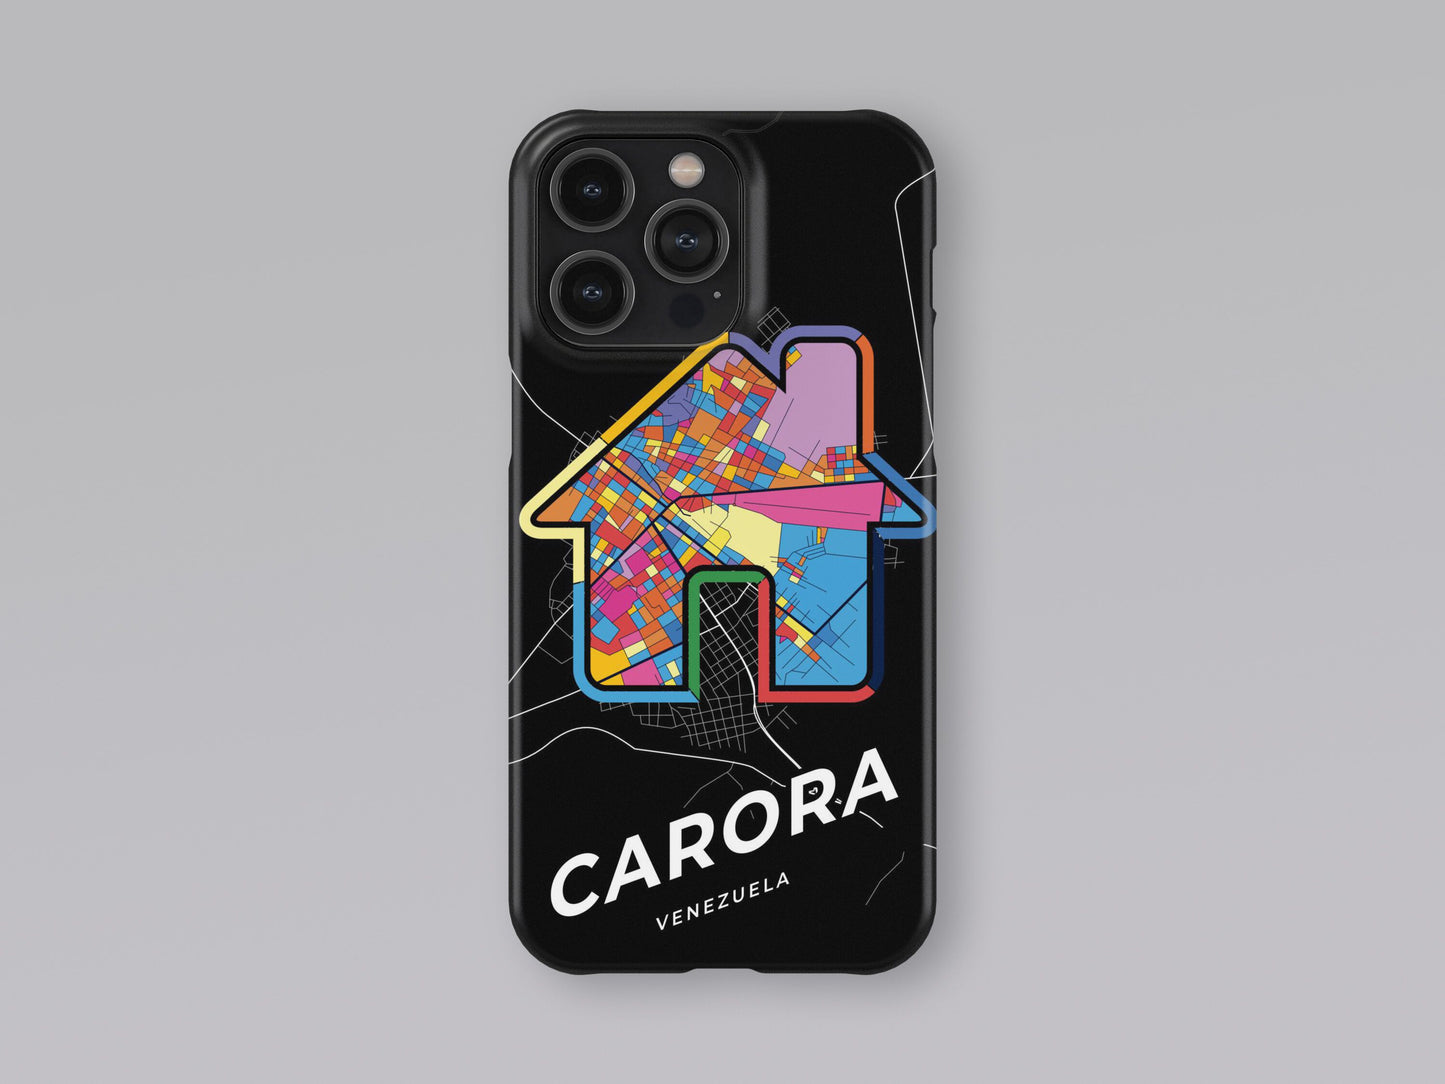 Carora Venezuela slim phone case with colorful icon. Birthday, wedding or housewarming gift. Couple match cases. 3